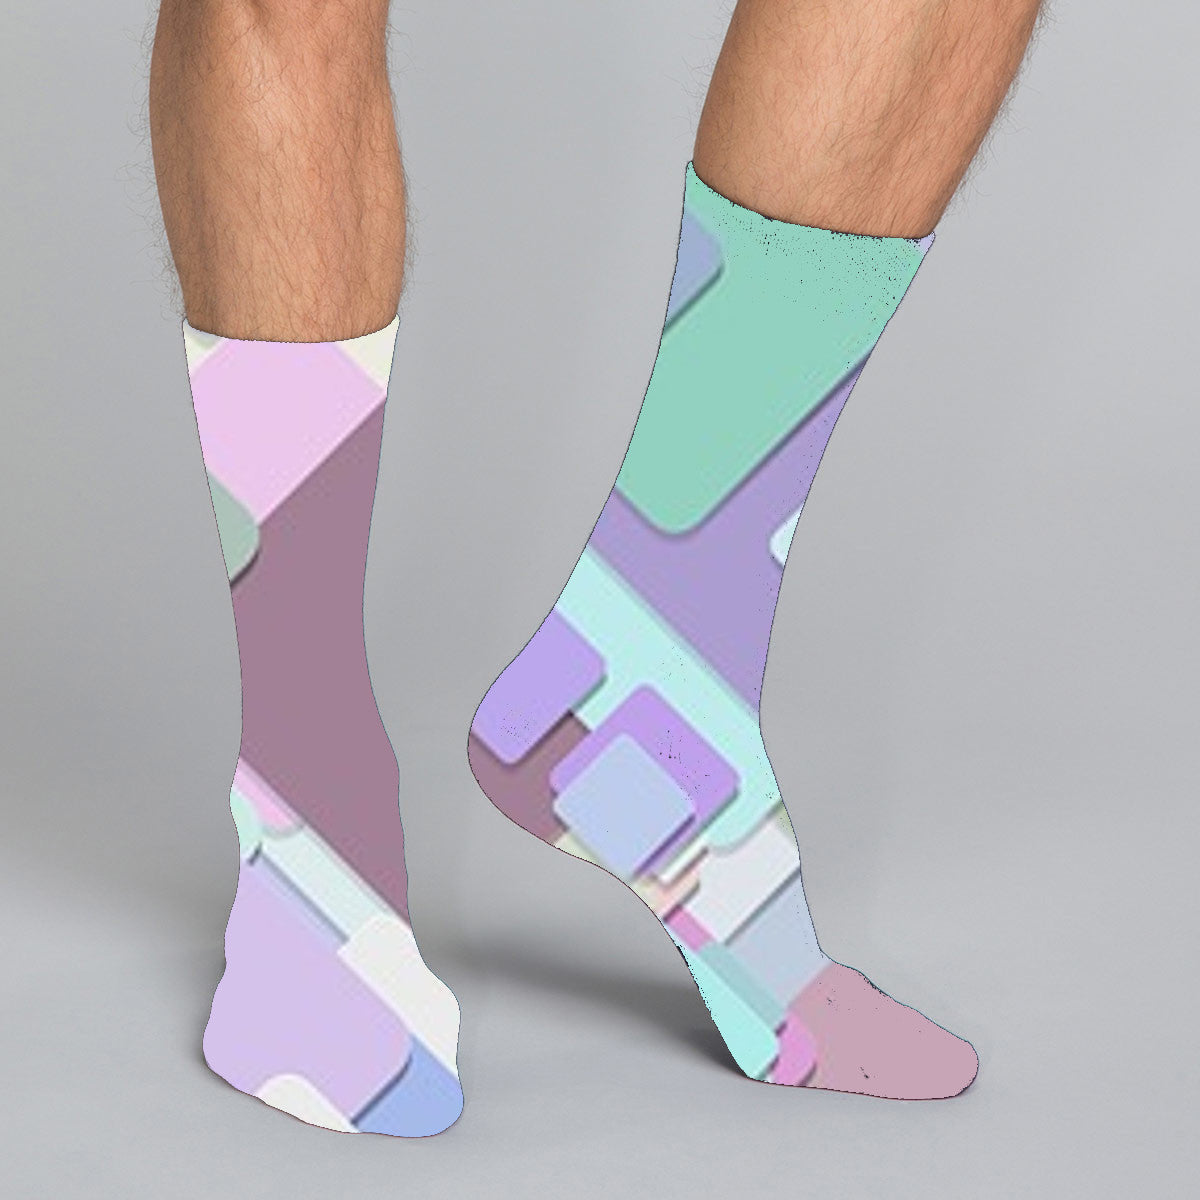 Women's, men's & youth's casual crew socks in unique colorful design celebrating food, fashion, fitness, fun